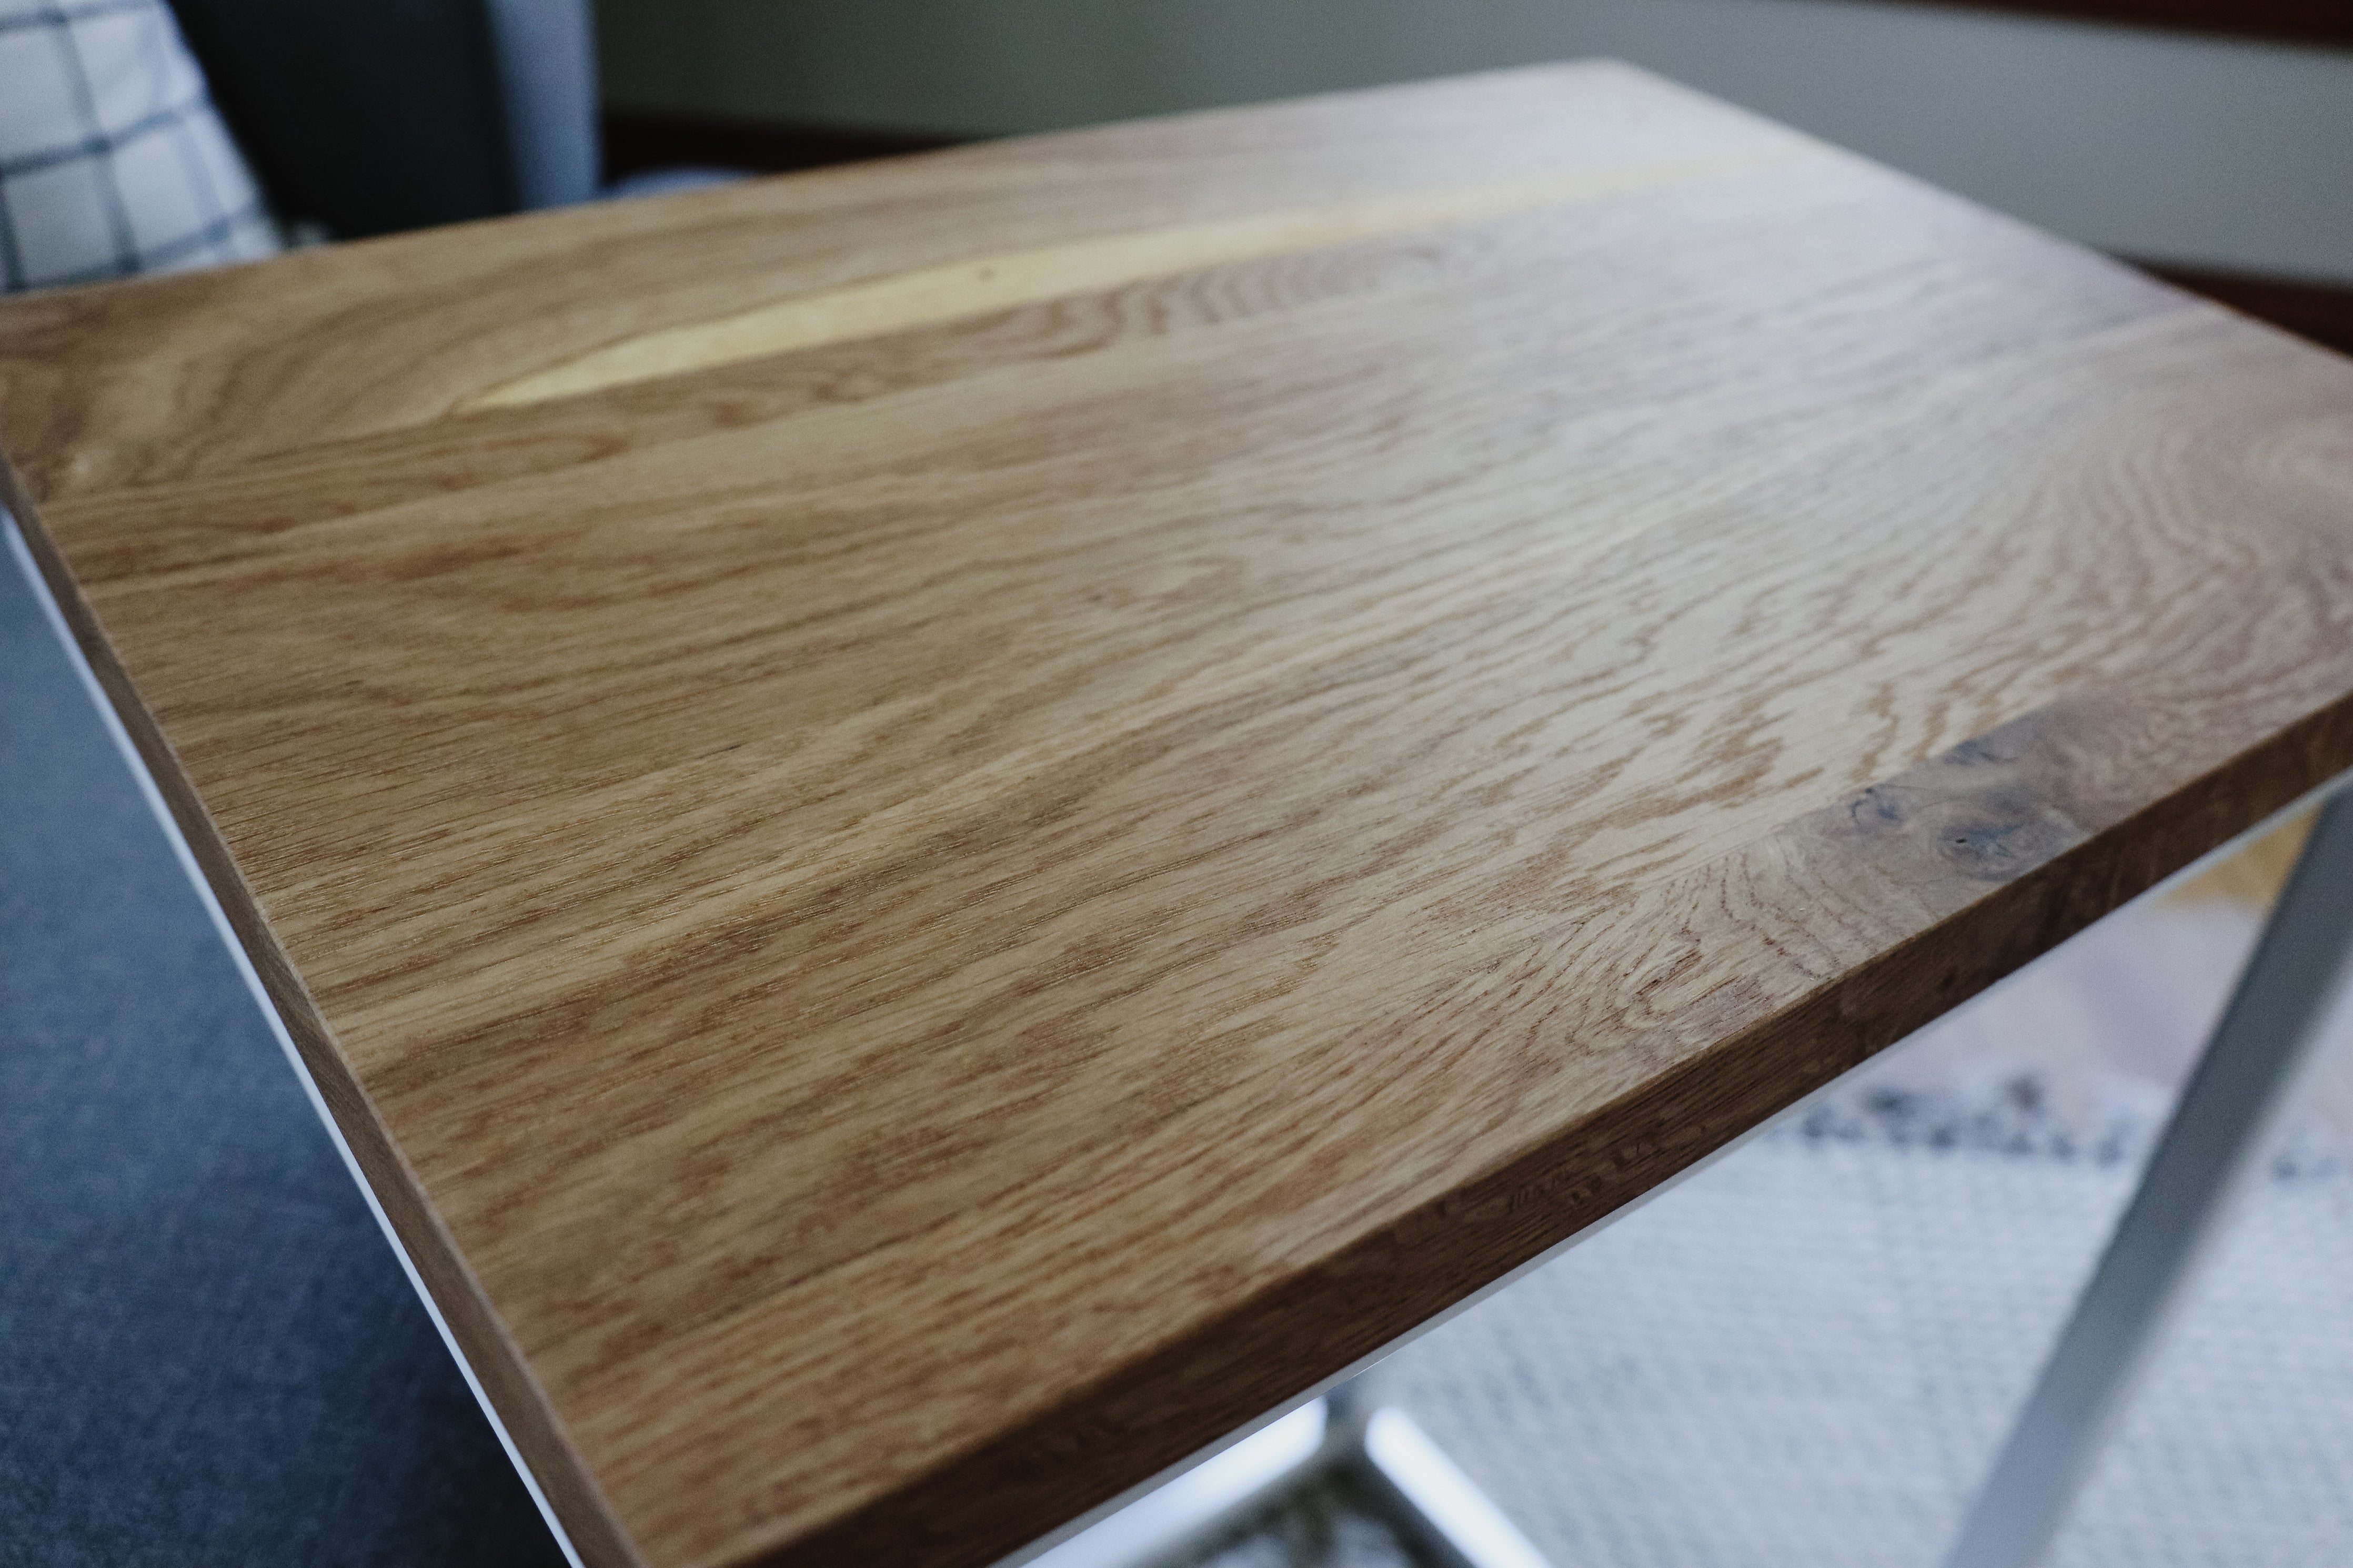 White Oak Modern Side C Table with White Base